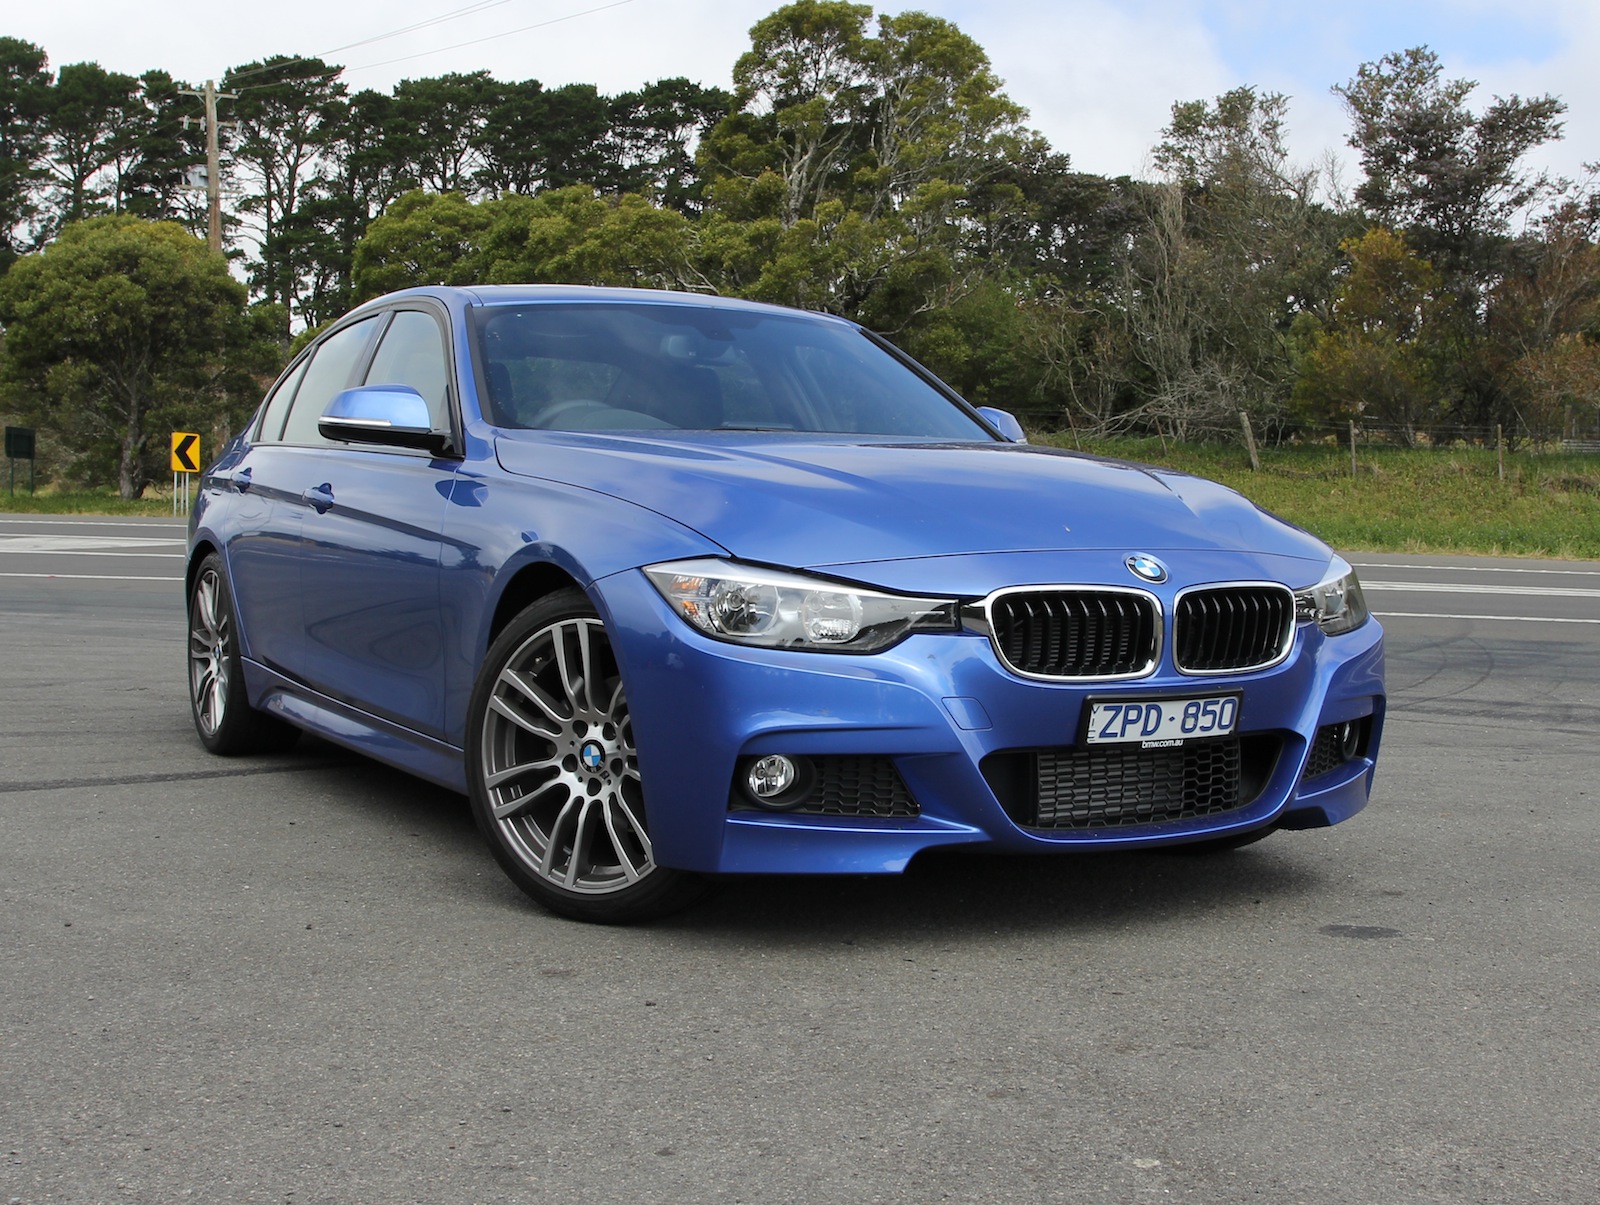 2014 BMW 316i M Sport Review by Car Advice - autoevolution